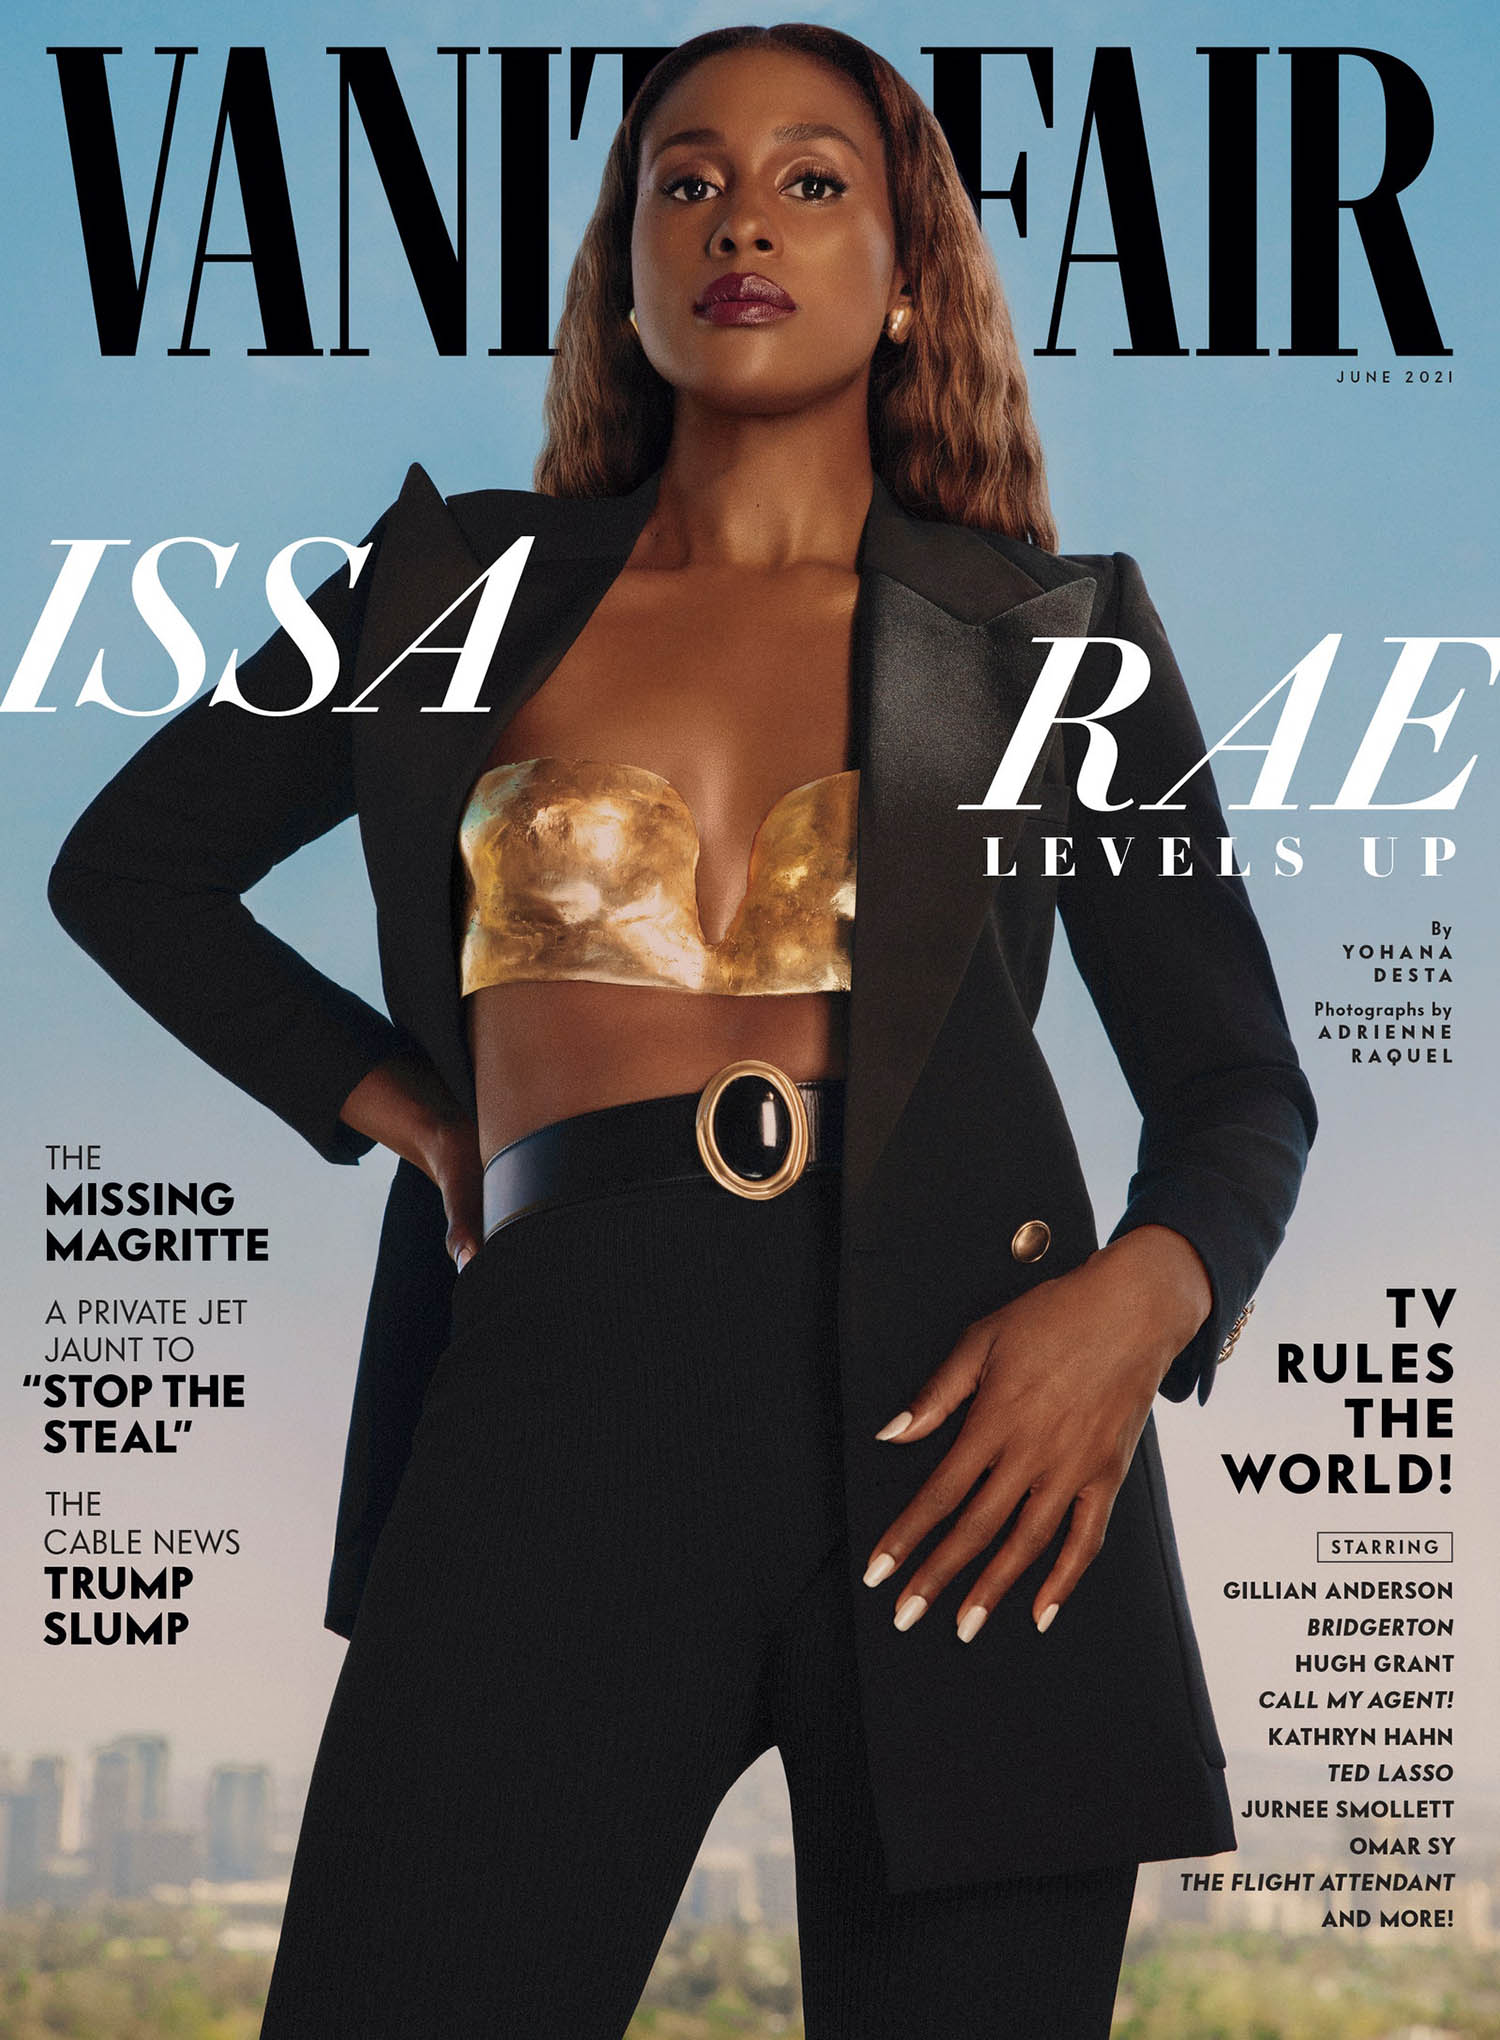 Issa Rae covers Vanity Fair June 2021 by Adrienne Raquel